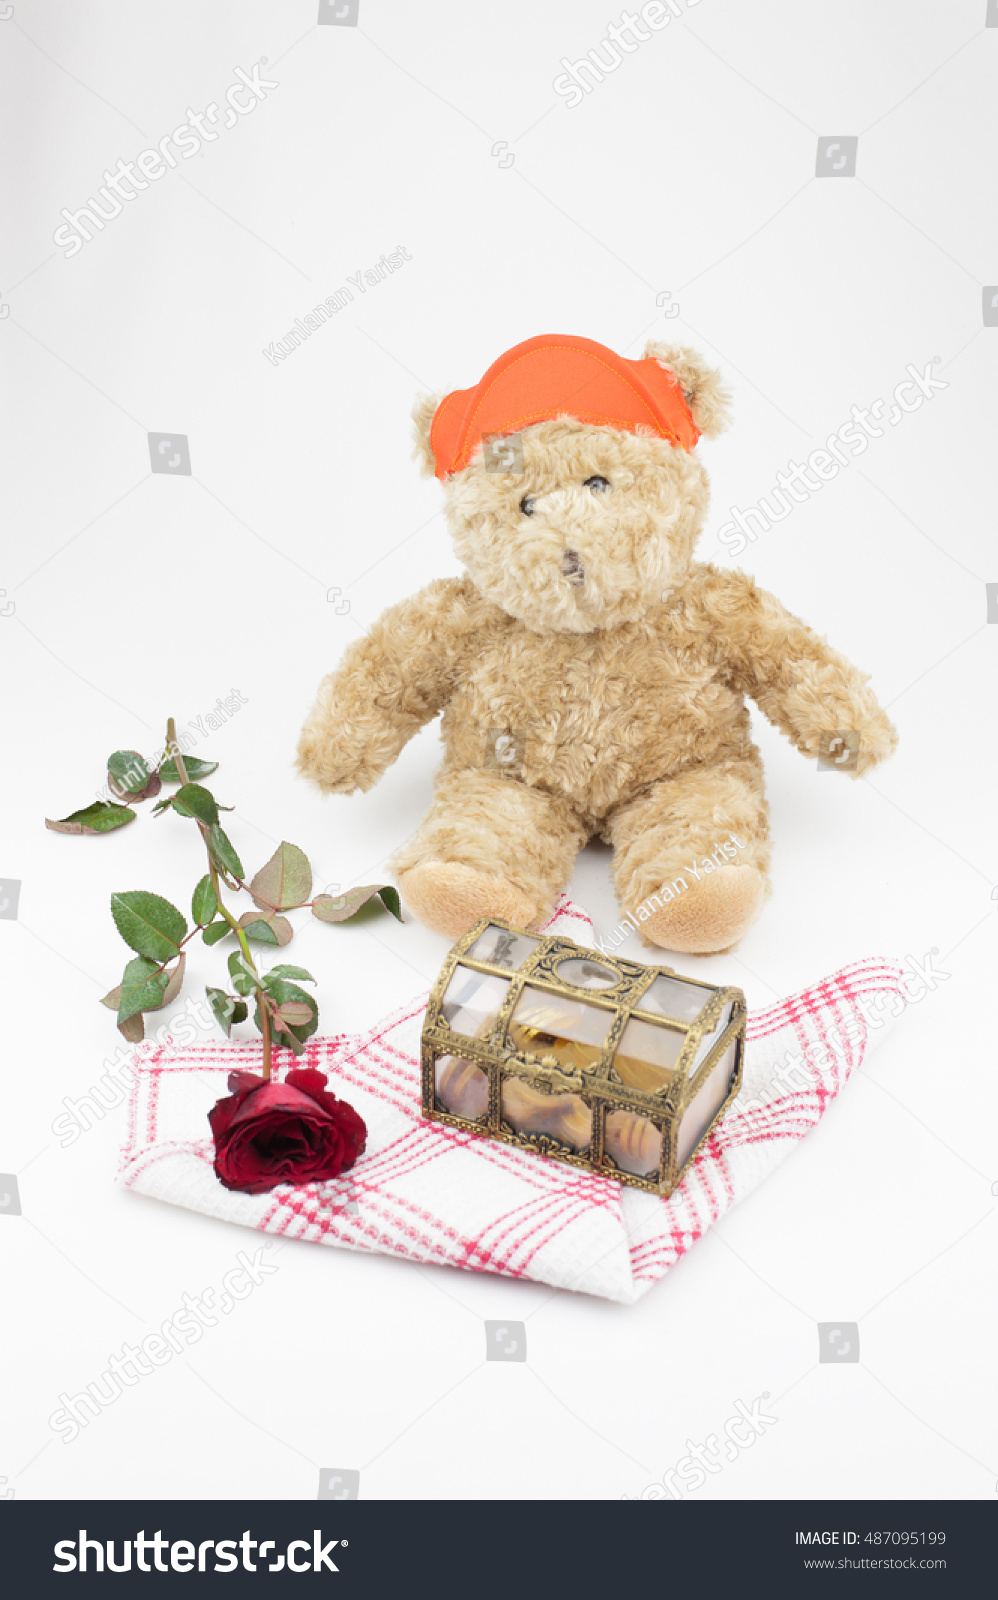 rose gold stuffed teddy bear